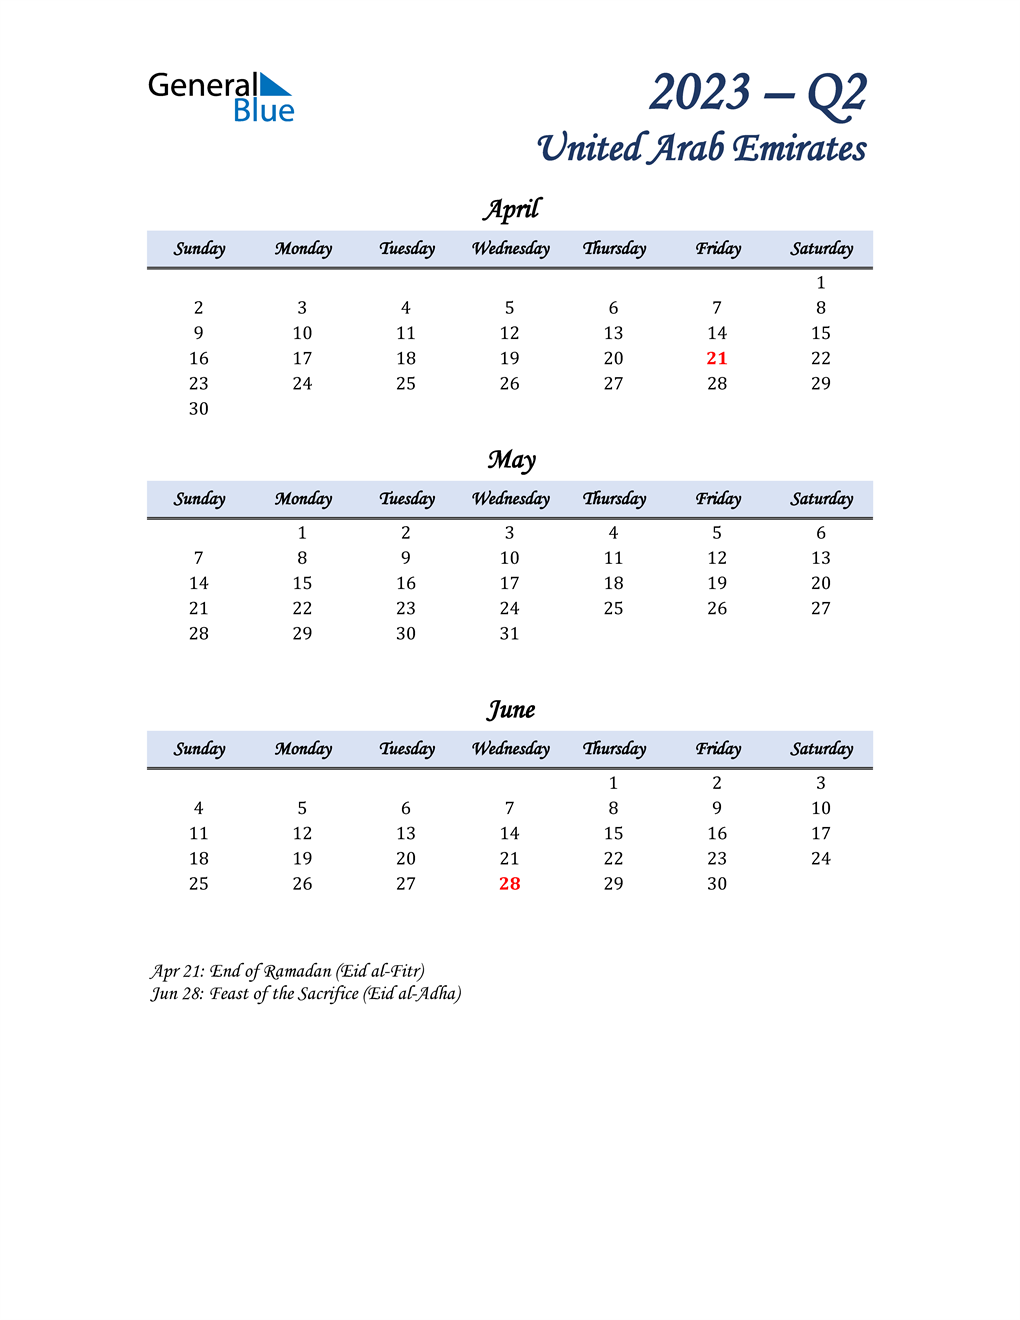  April, May, and June Calendar for United Arab Emirates